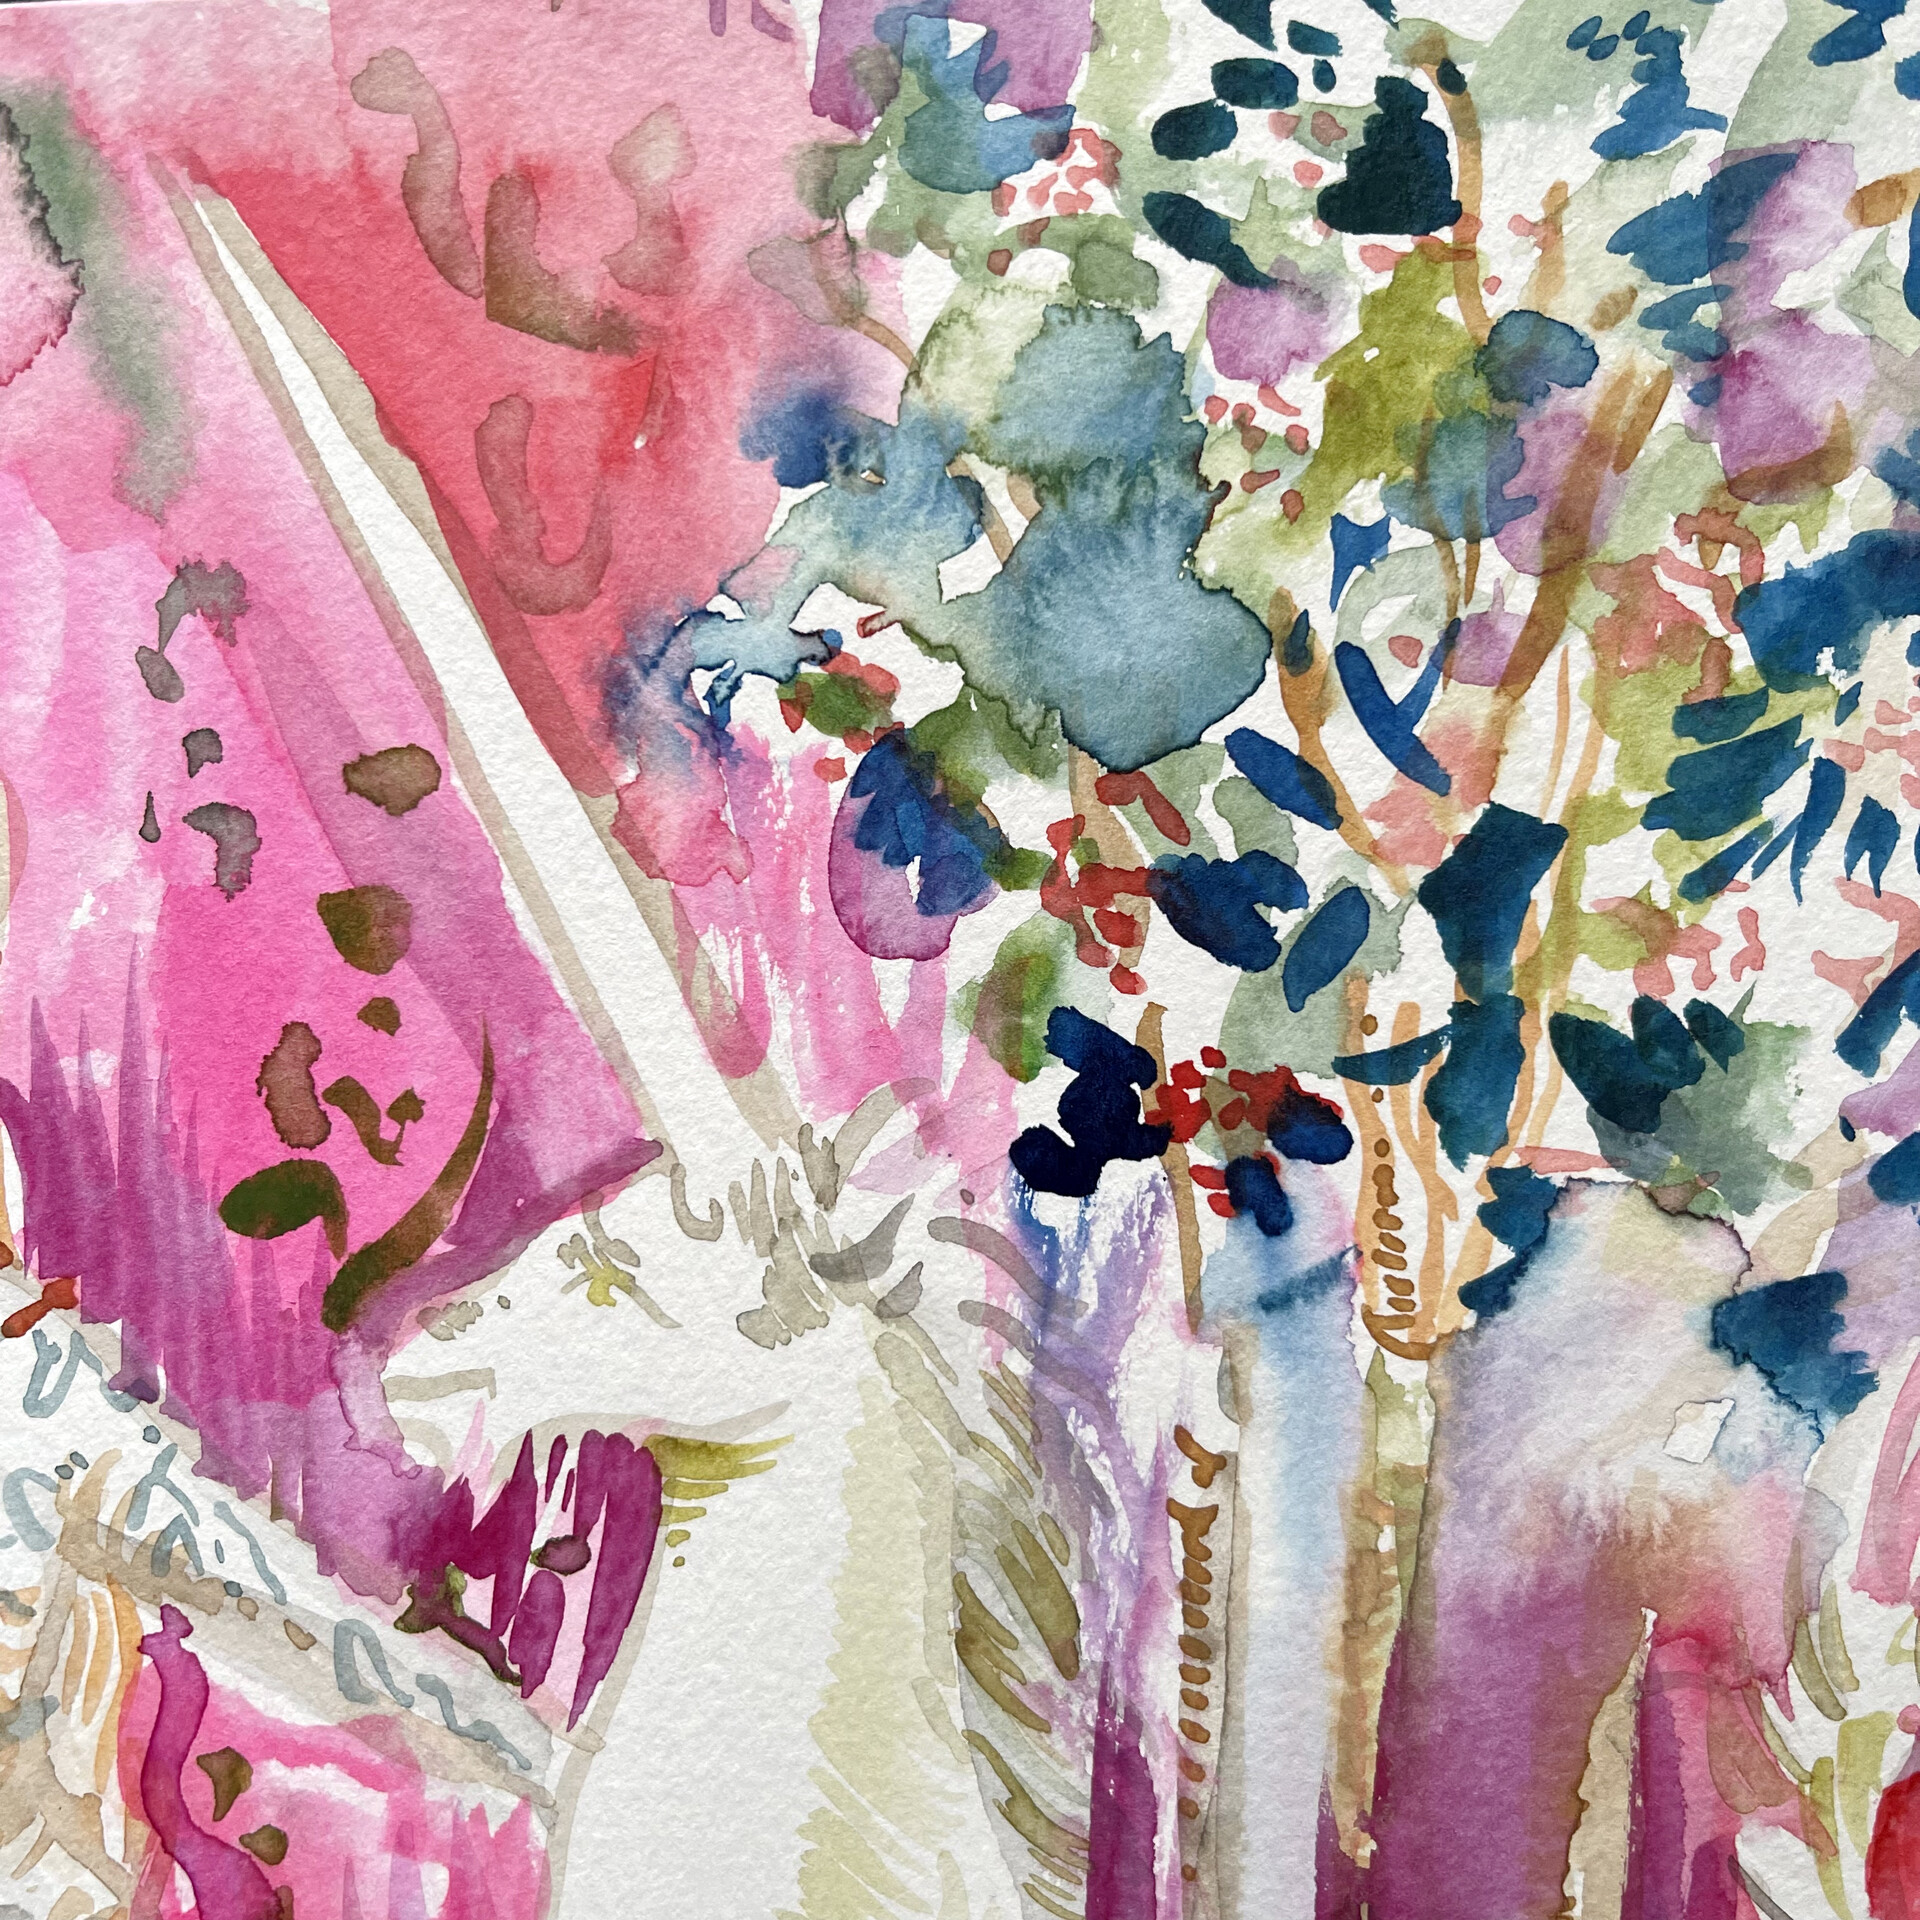 “La dame à la licorne”, 21 x 29,7, watercolours on paper, 2022